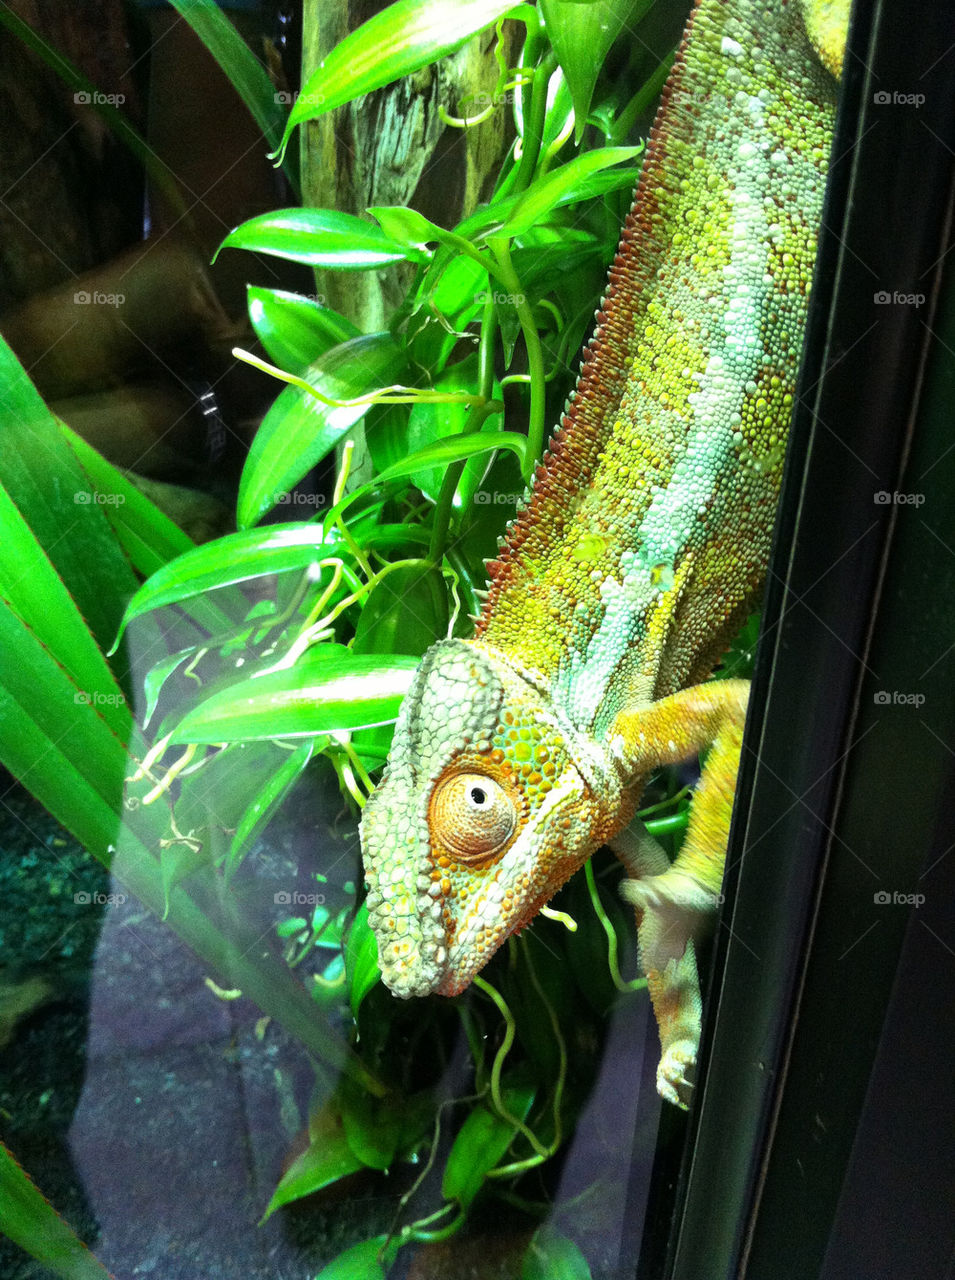 chameleon green reptile by geekz